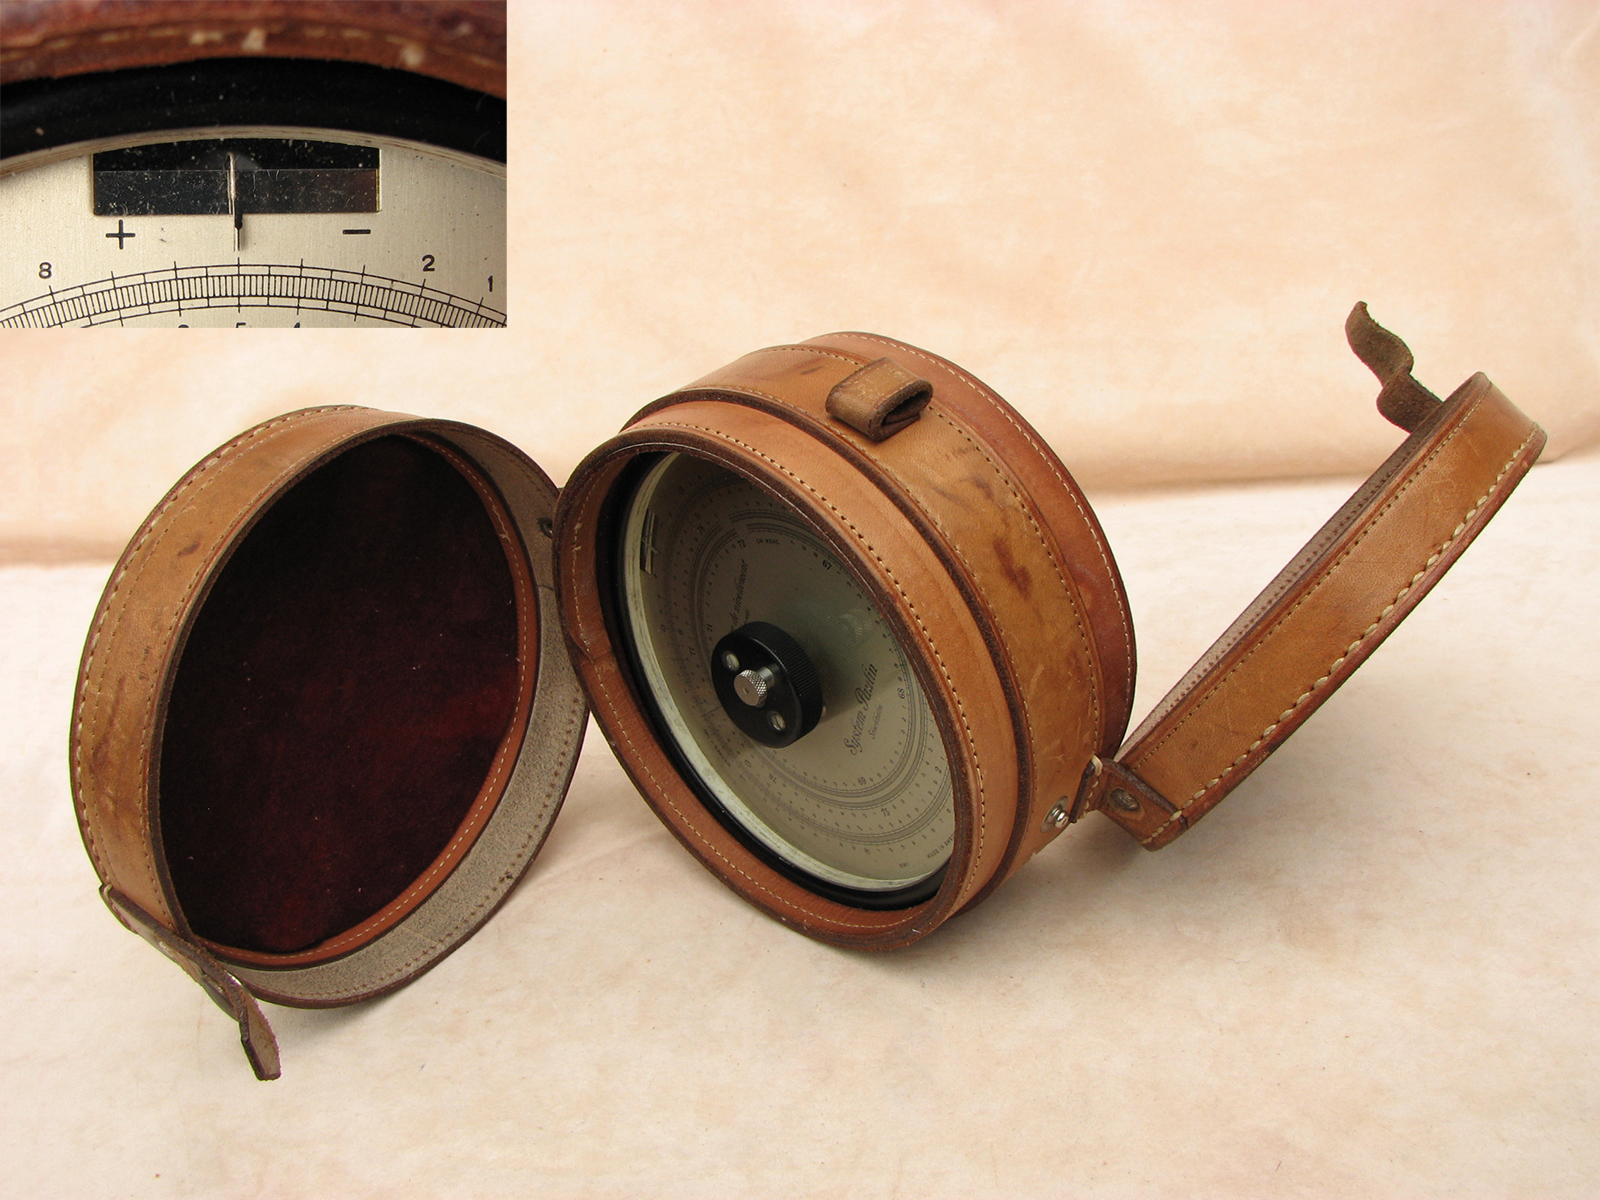 Ericsson System Paulin precision altimeter - circa 1930